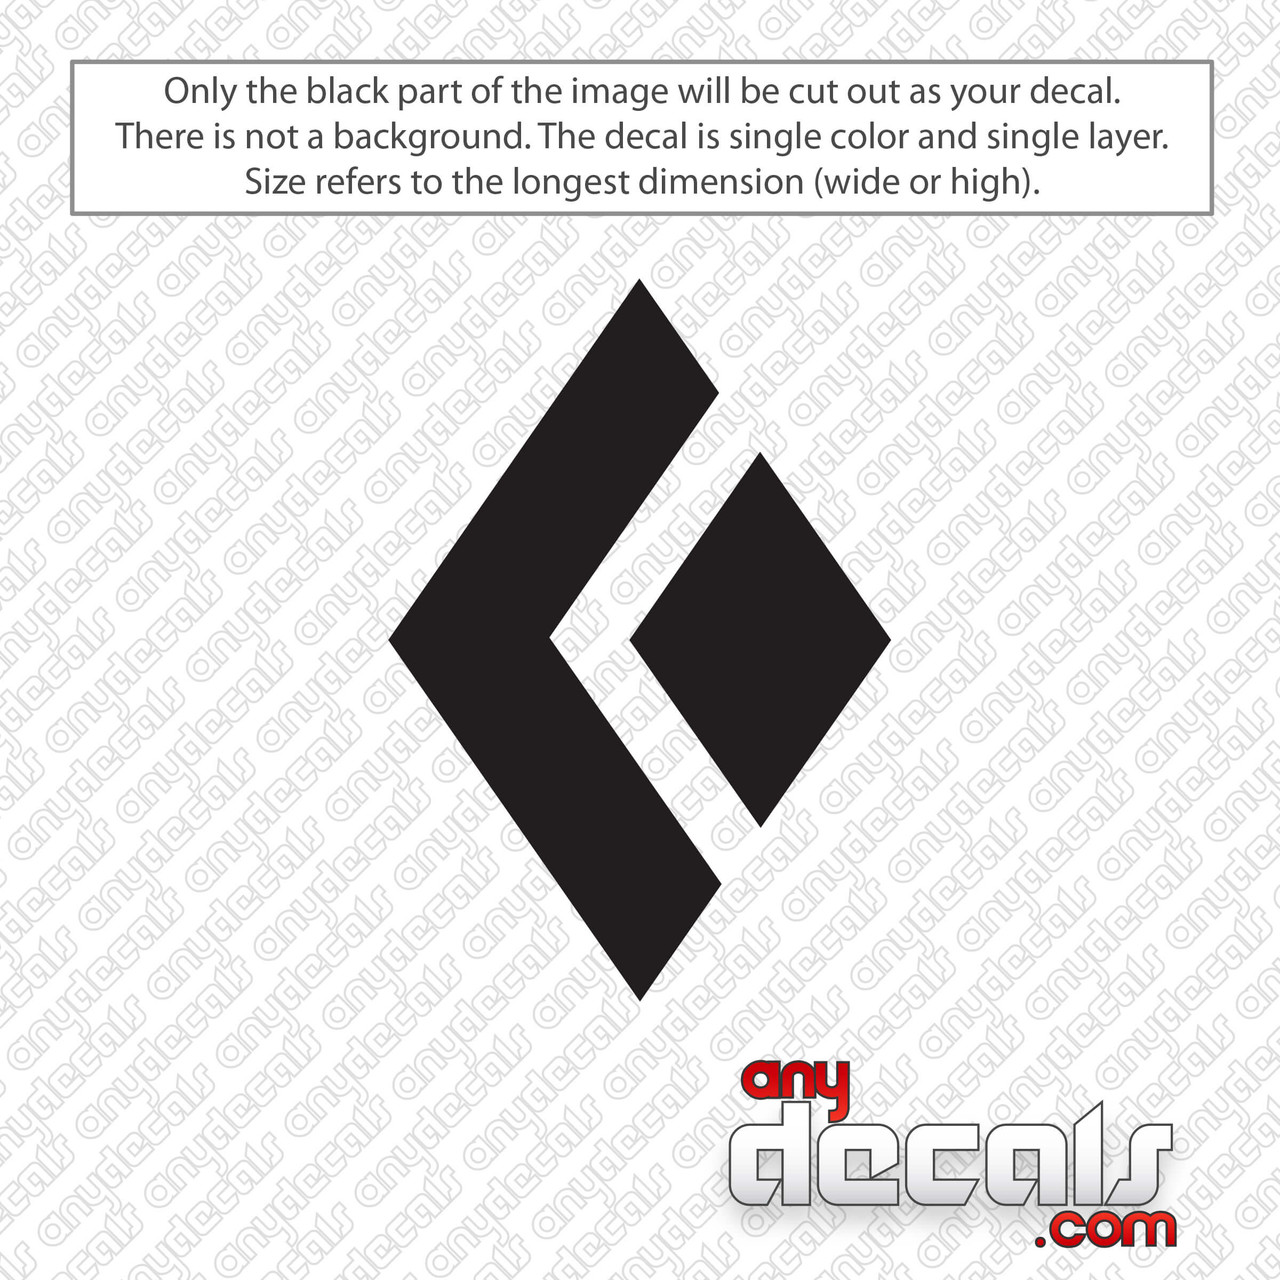 https://cdn11.bigcommerce.com/s-df97c/images/stencil/1280x1280/products/1010/2013/black-diamond-logo-emblem-decal-sticker__44920.1594365109.jpg?c=2?imbypass=on